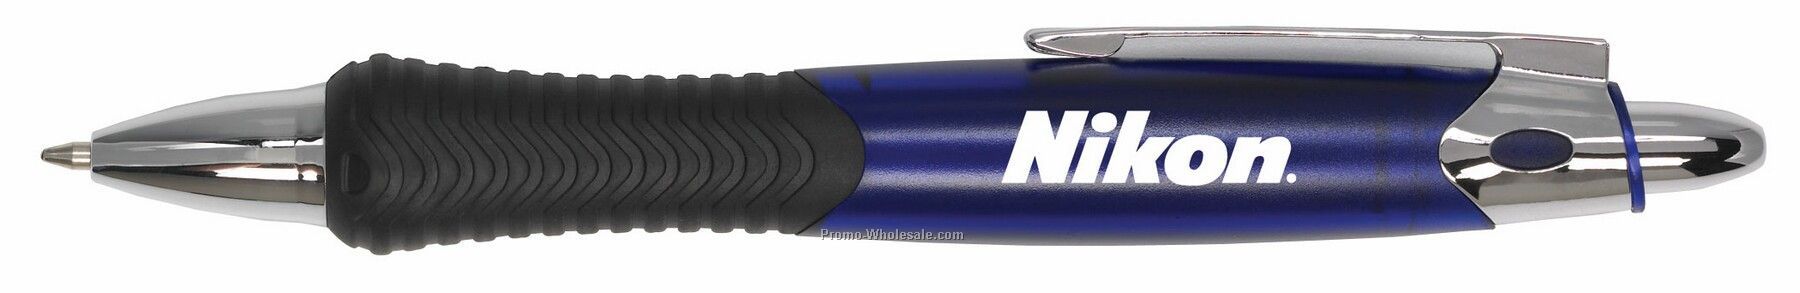 Titan Metallic Barrel Pen With Matching Grip